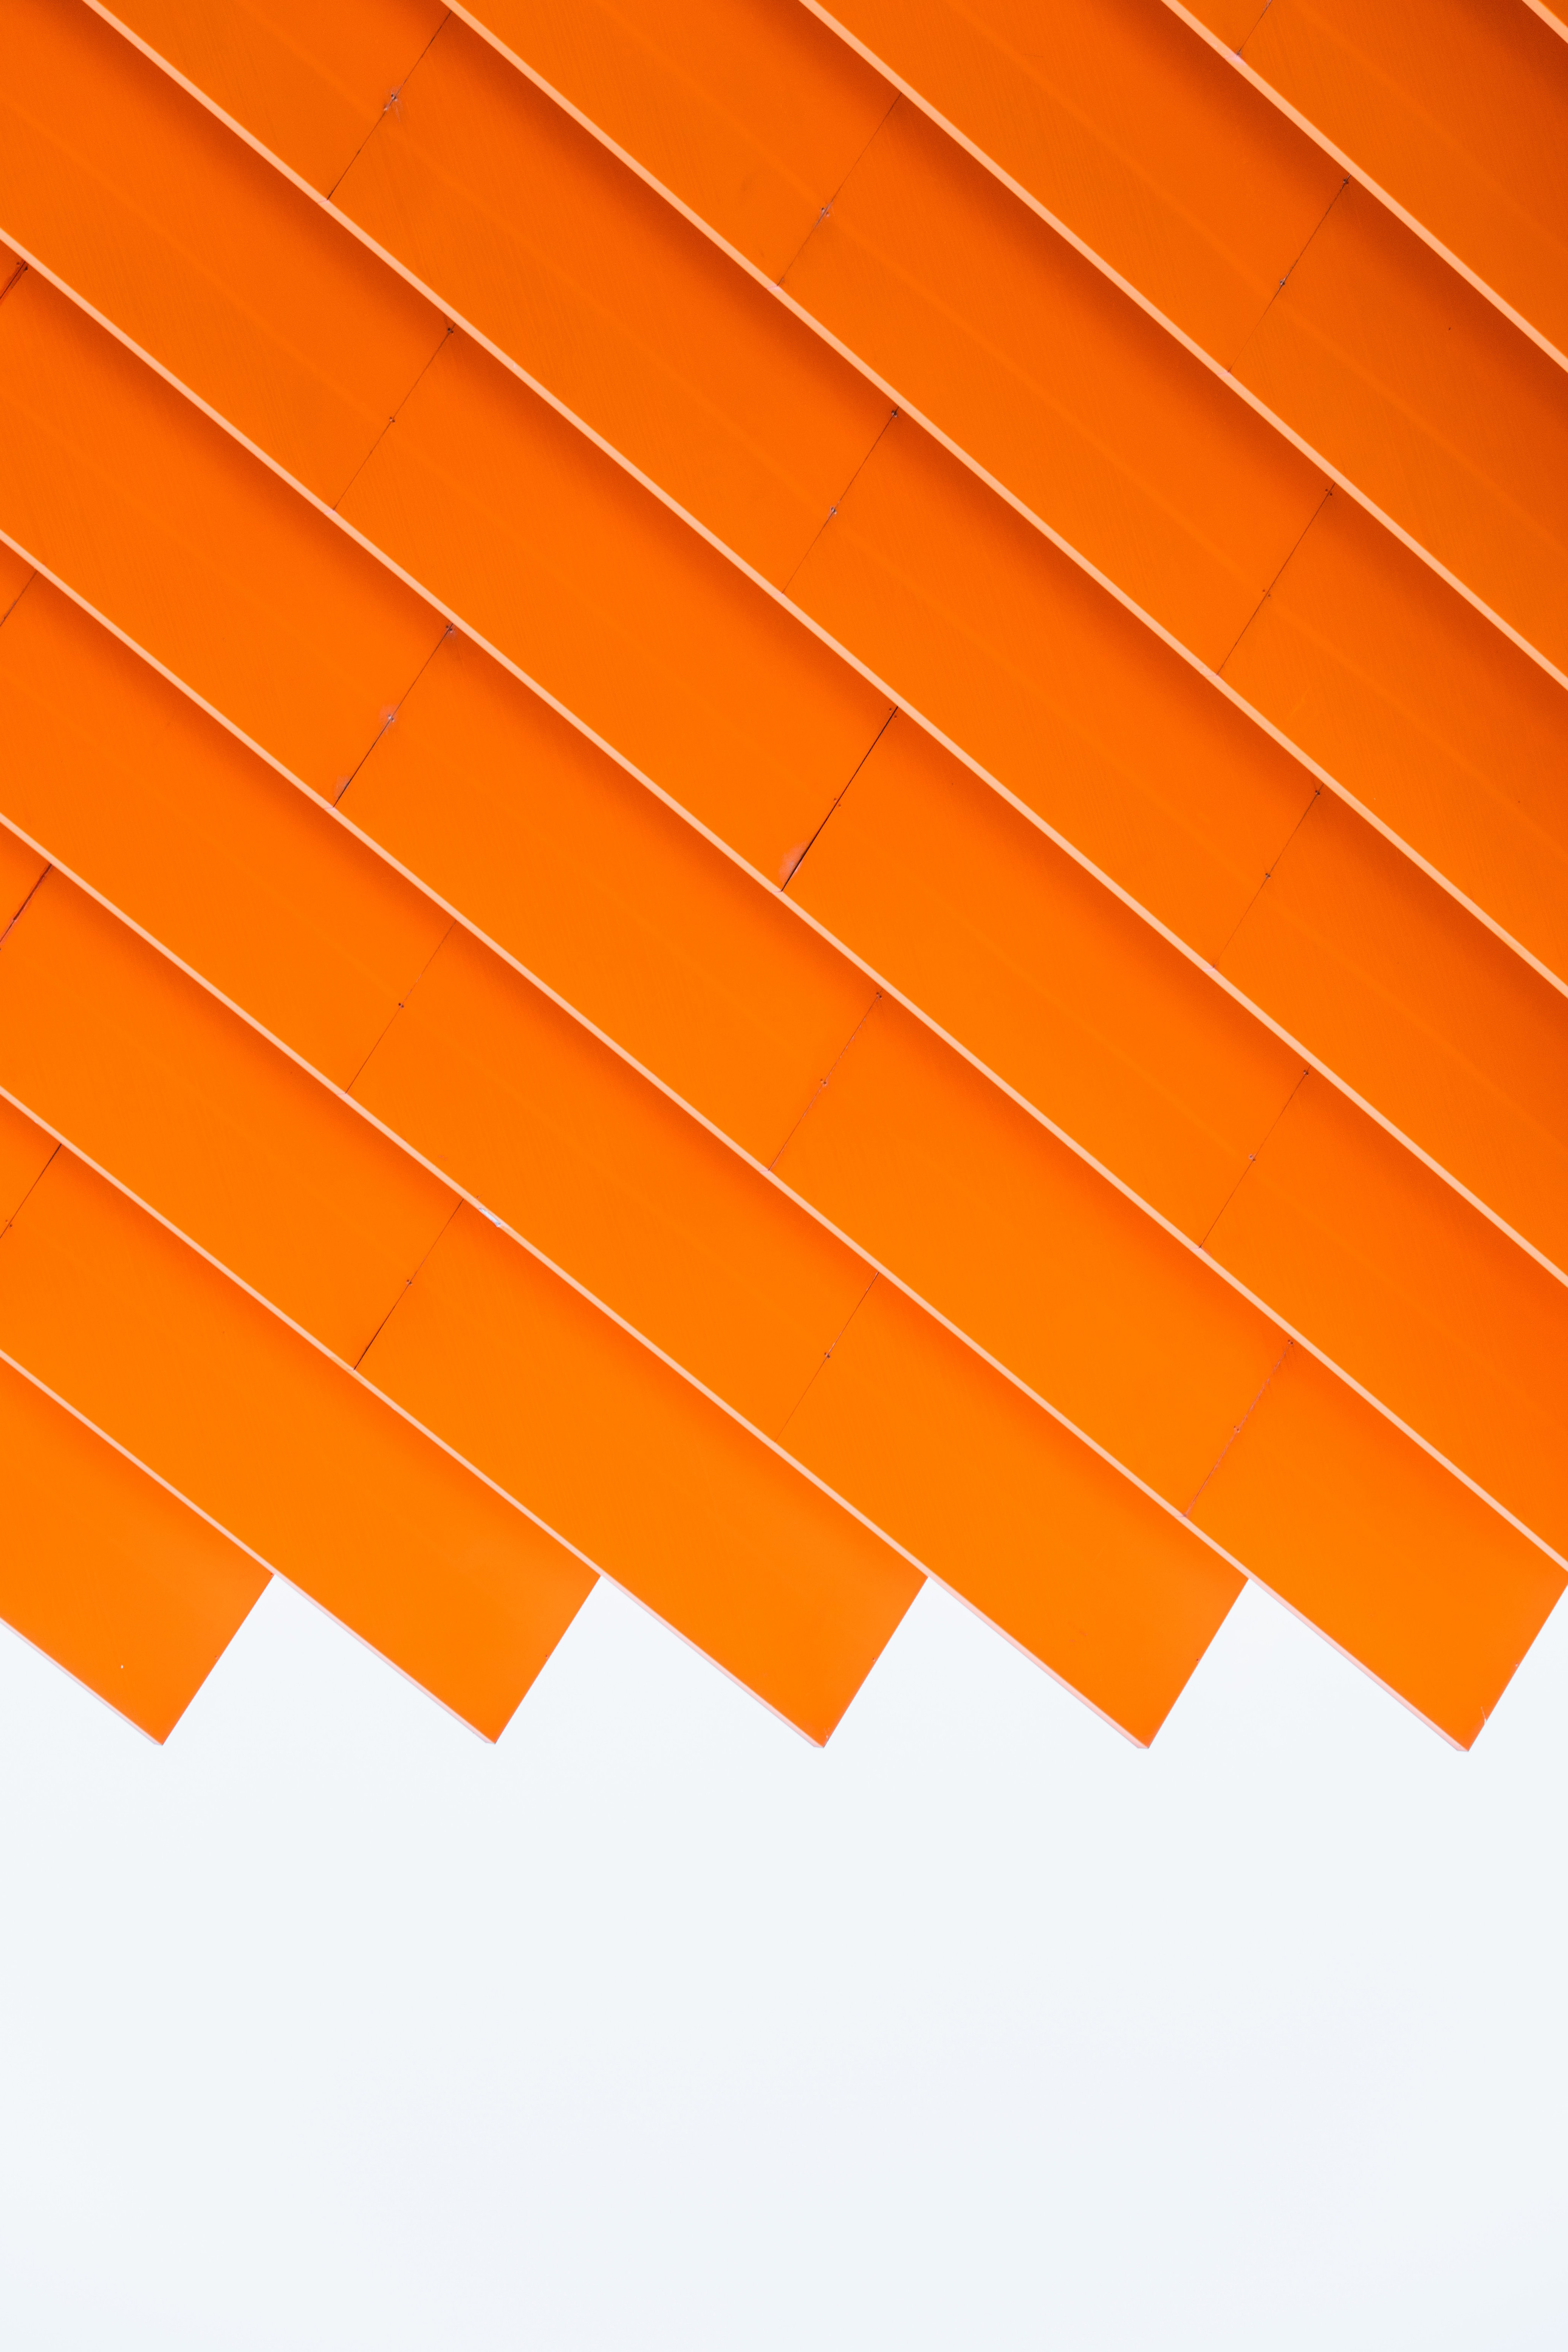 orange, layers, texture, textures, panels, panel phone wallpaper